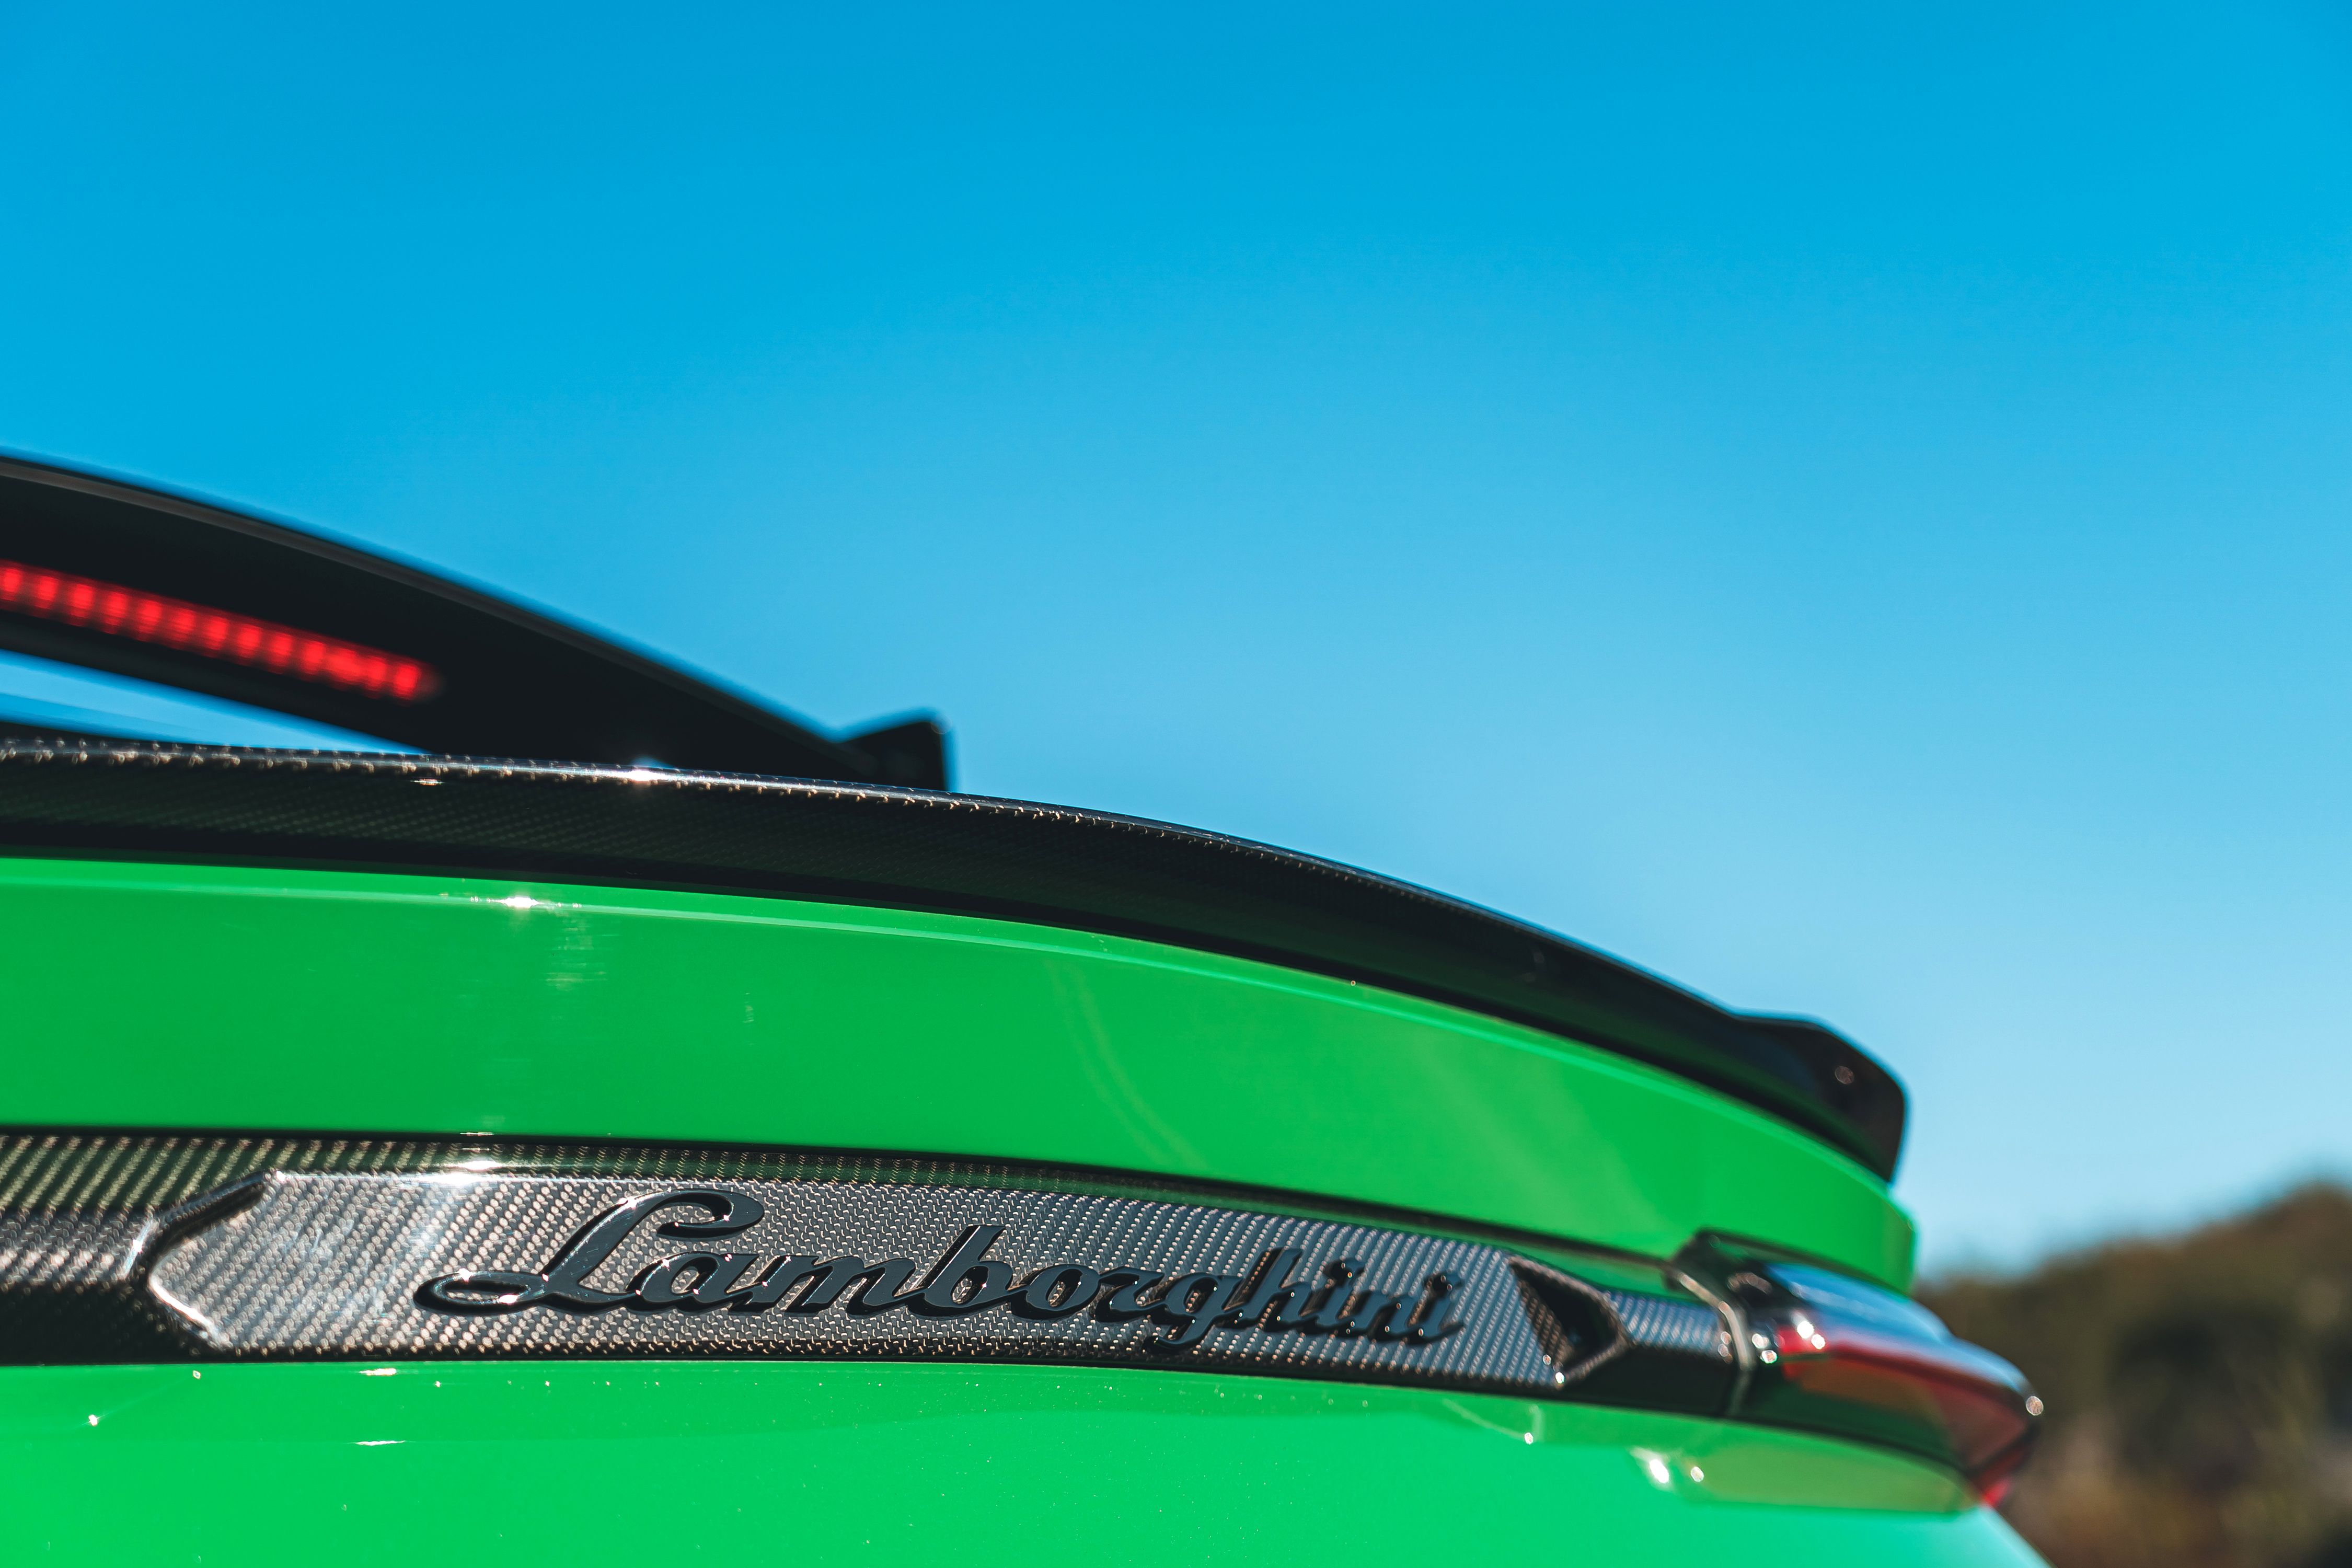 Model Perspective: Lamborghini Urus Performante